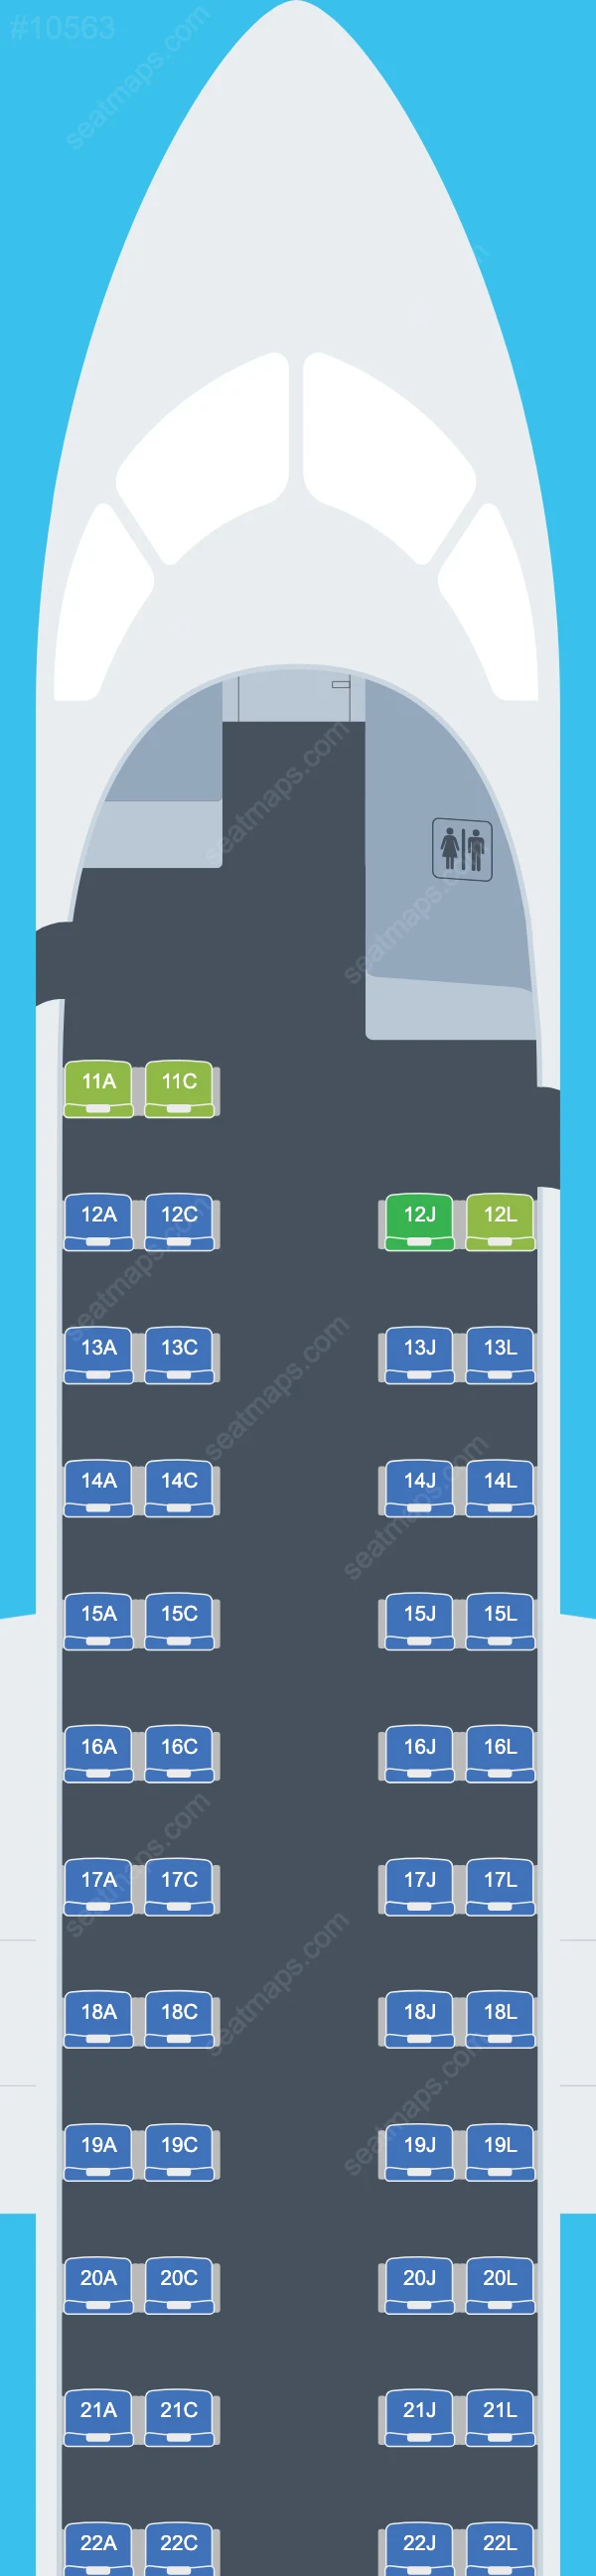 Zambia Airways Bombardier Q400 Seat Maps Q400